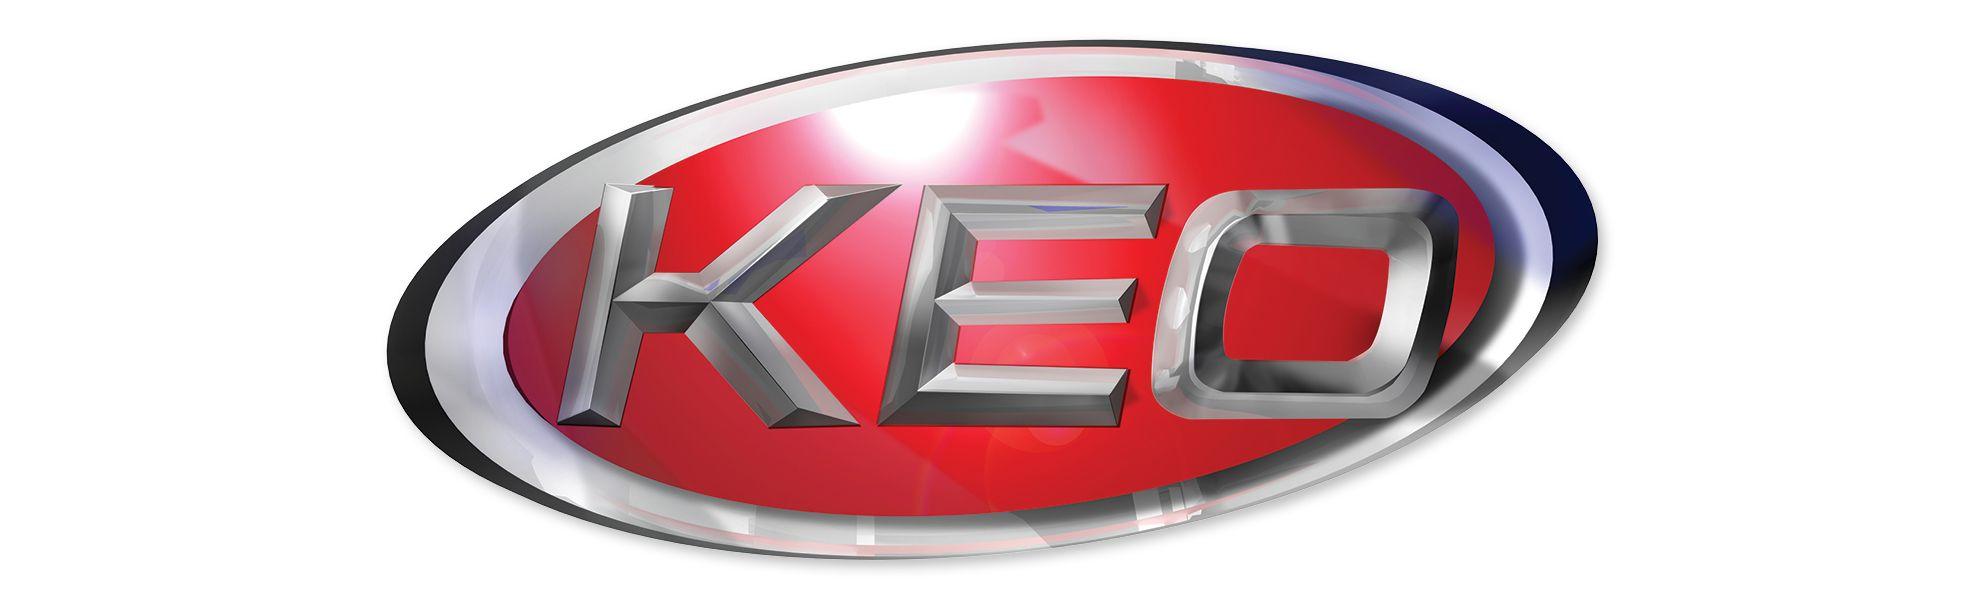 Keo Logo - CaseStudy KEO Logo - Spry Ideas